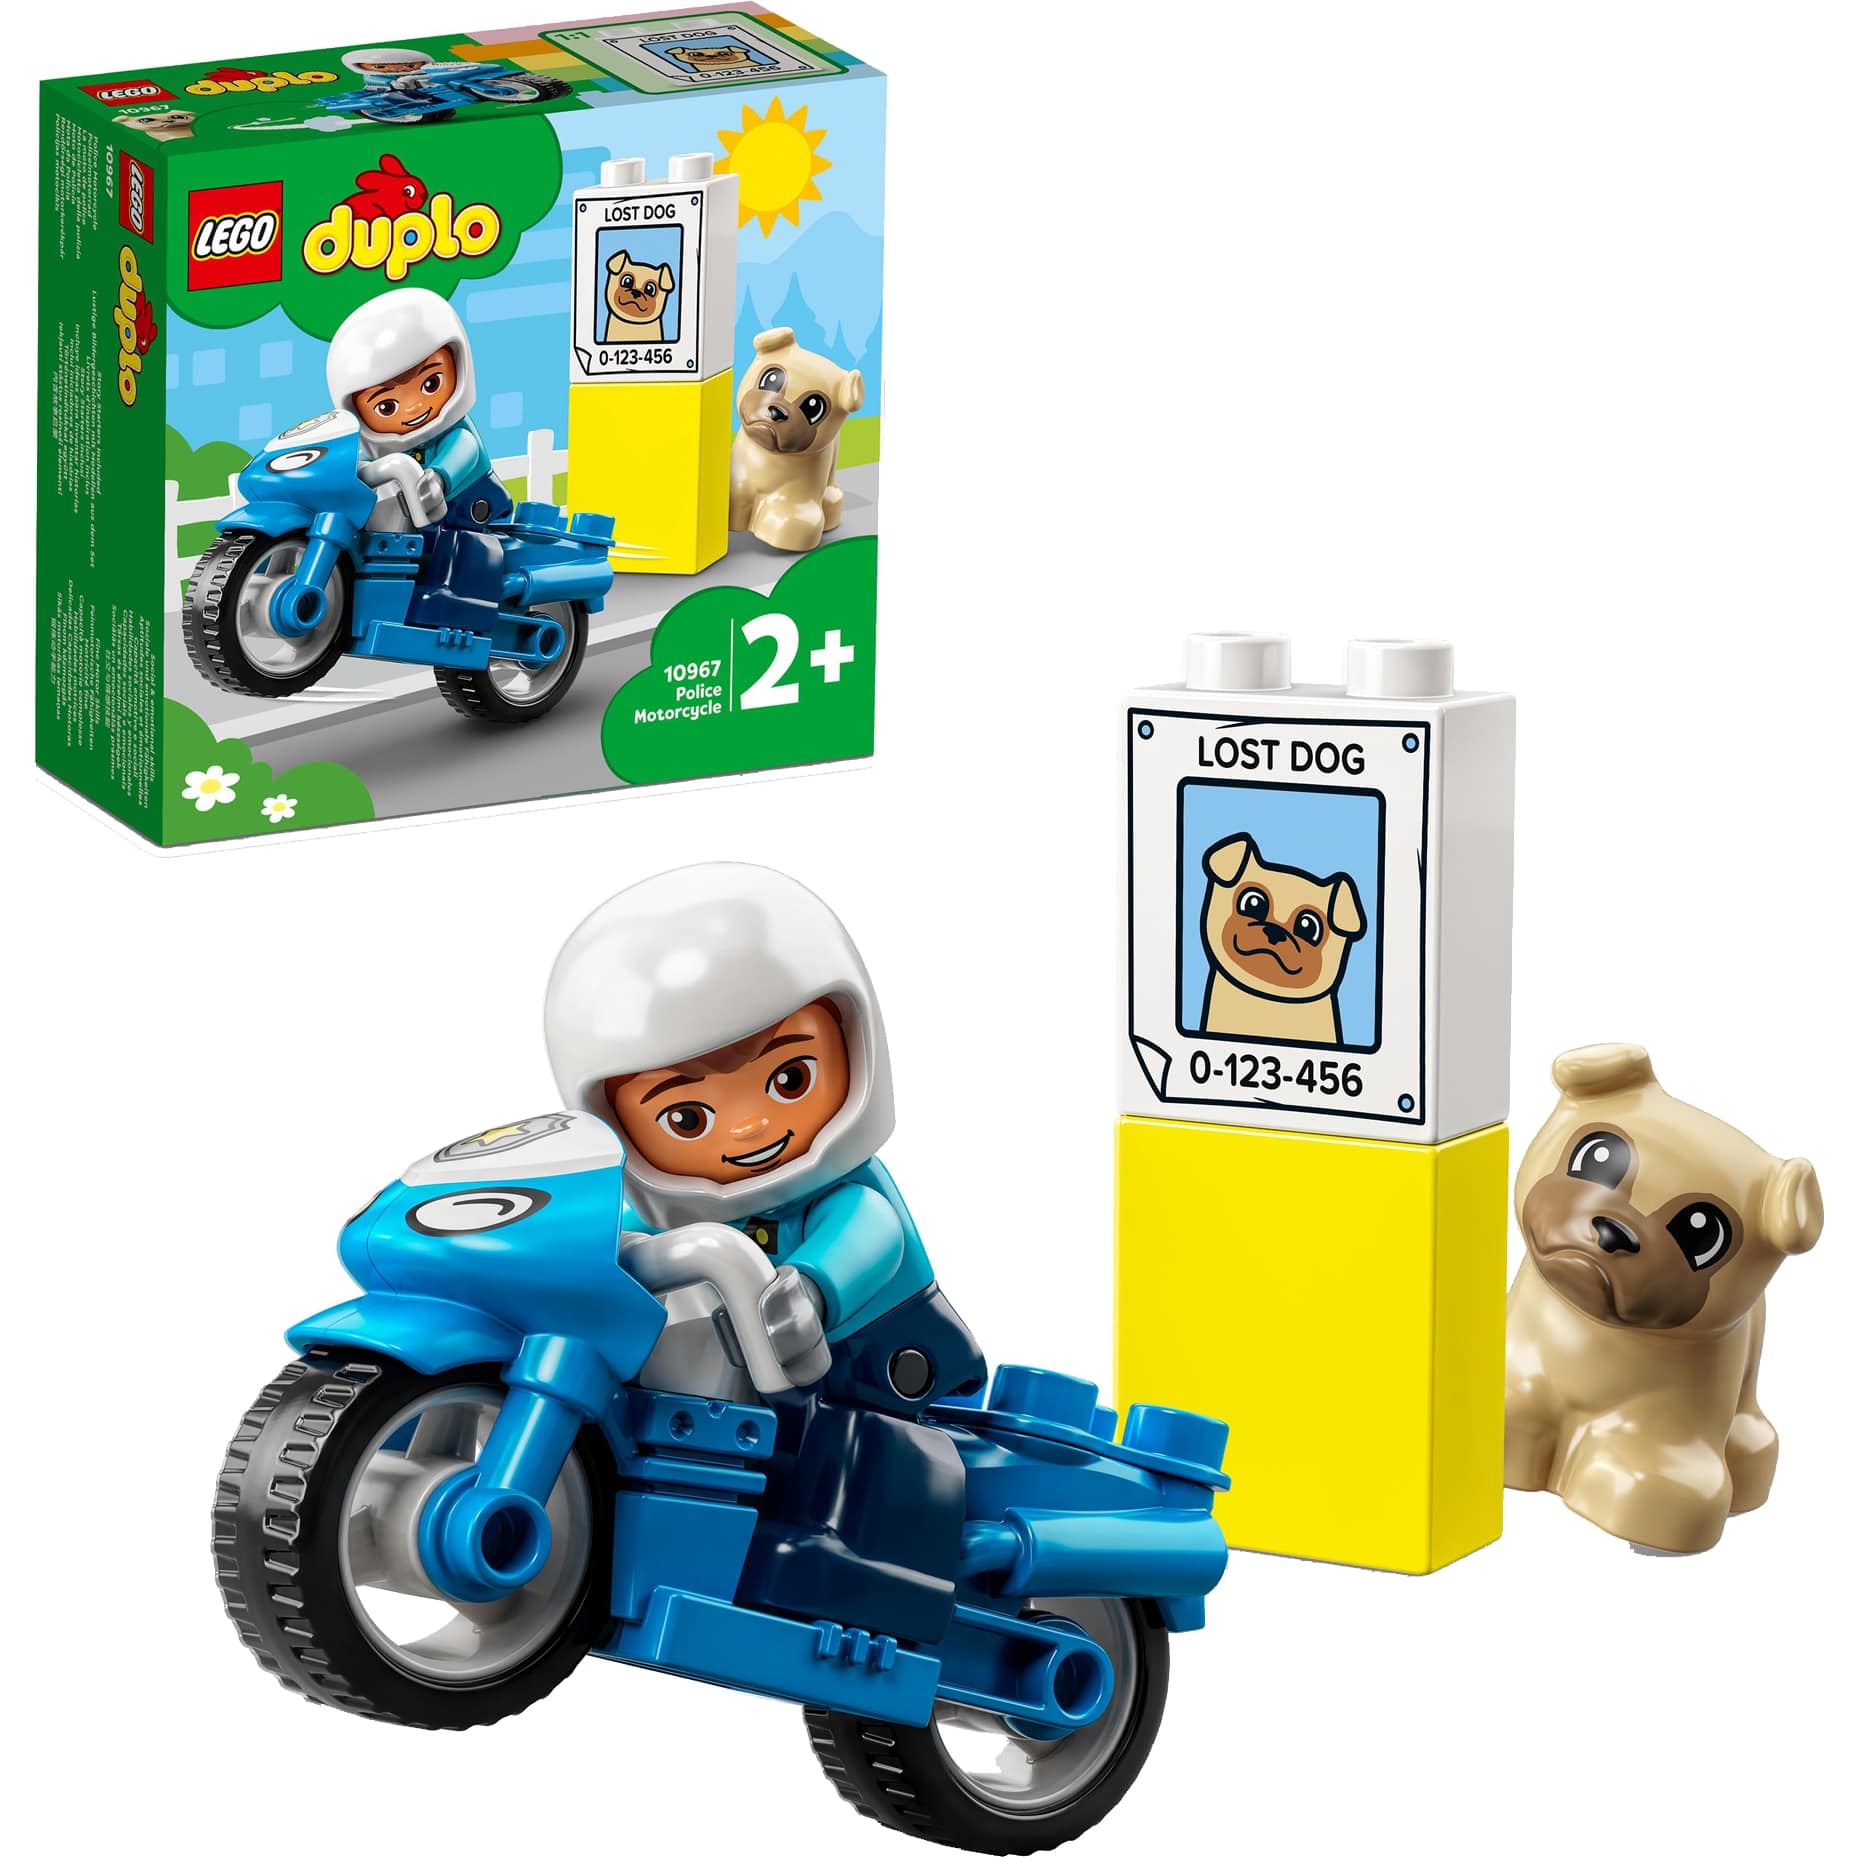 LEGO DUPLO Polizeimotorrad                            10967